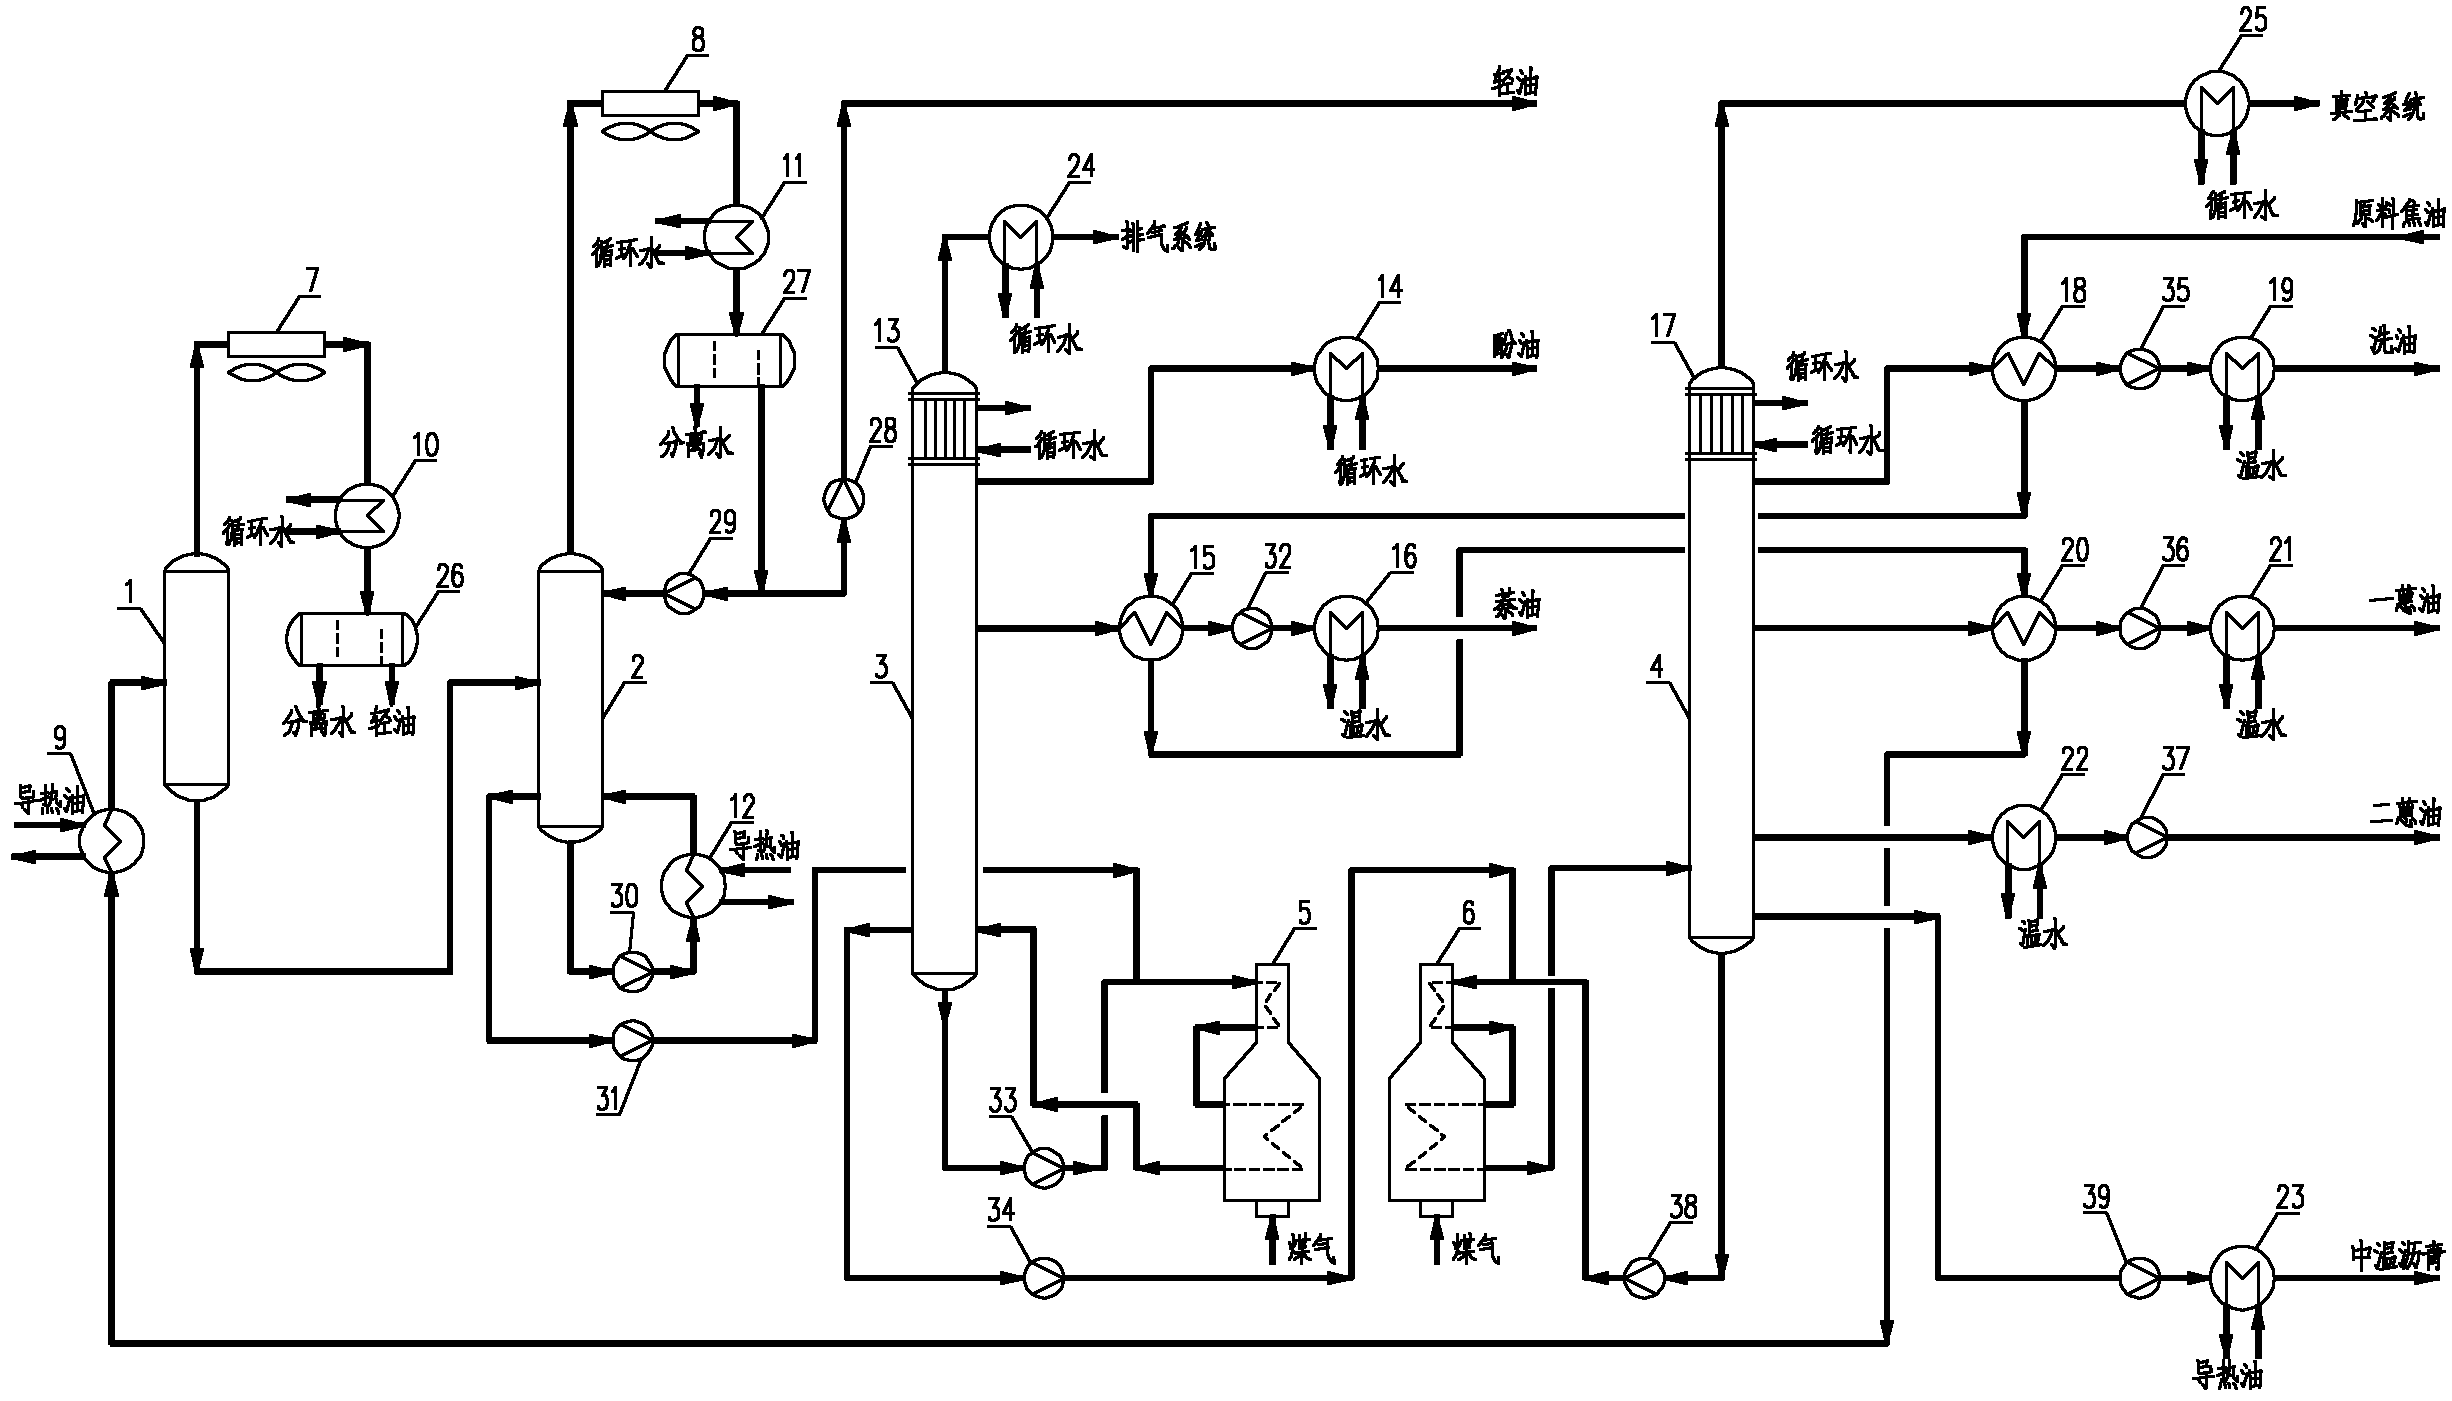 Three-tower type atmospheric-vacuum tar distillation process